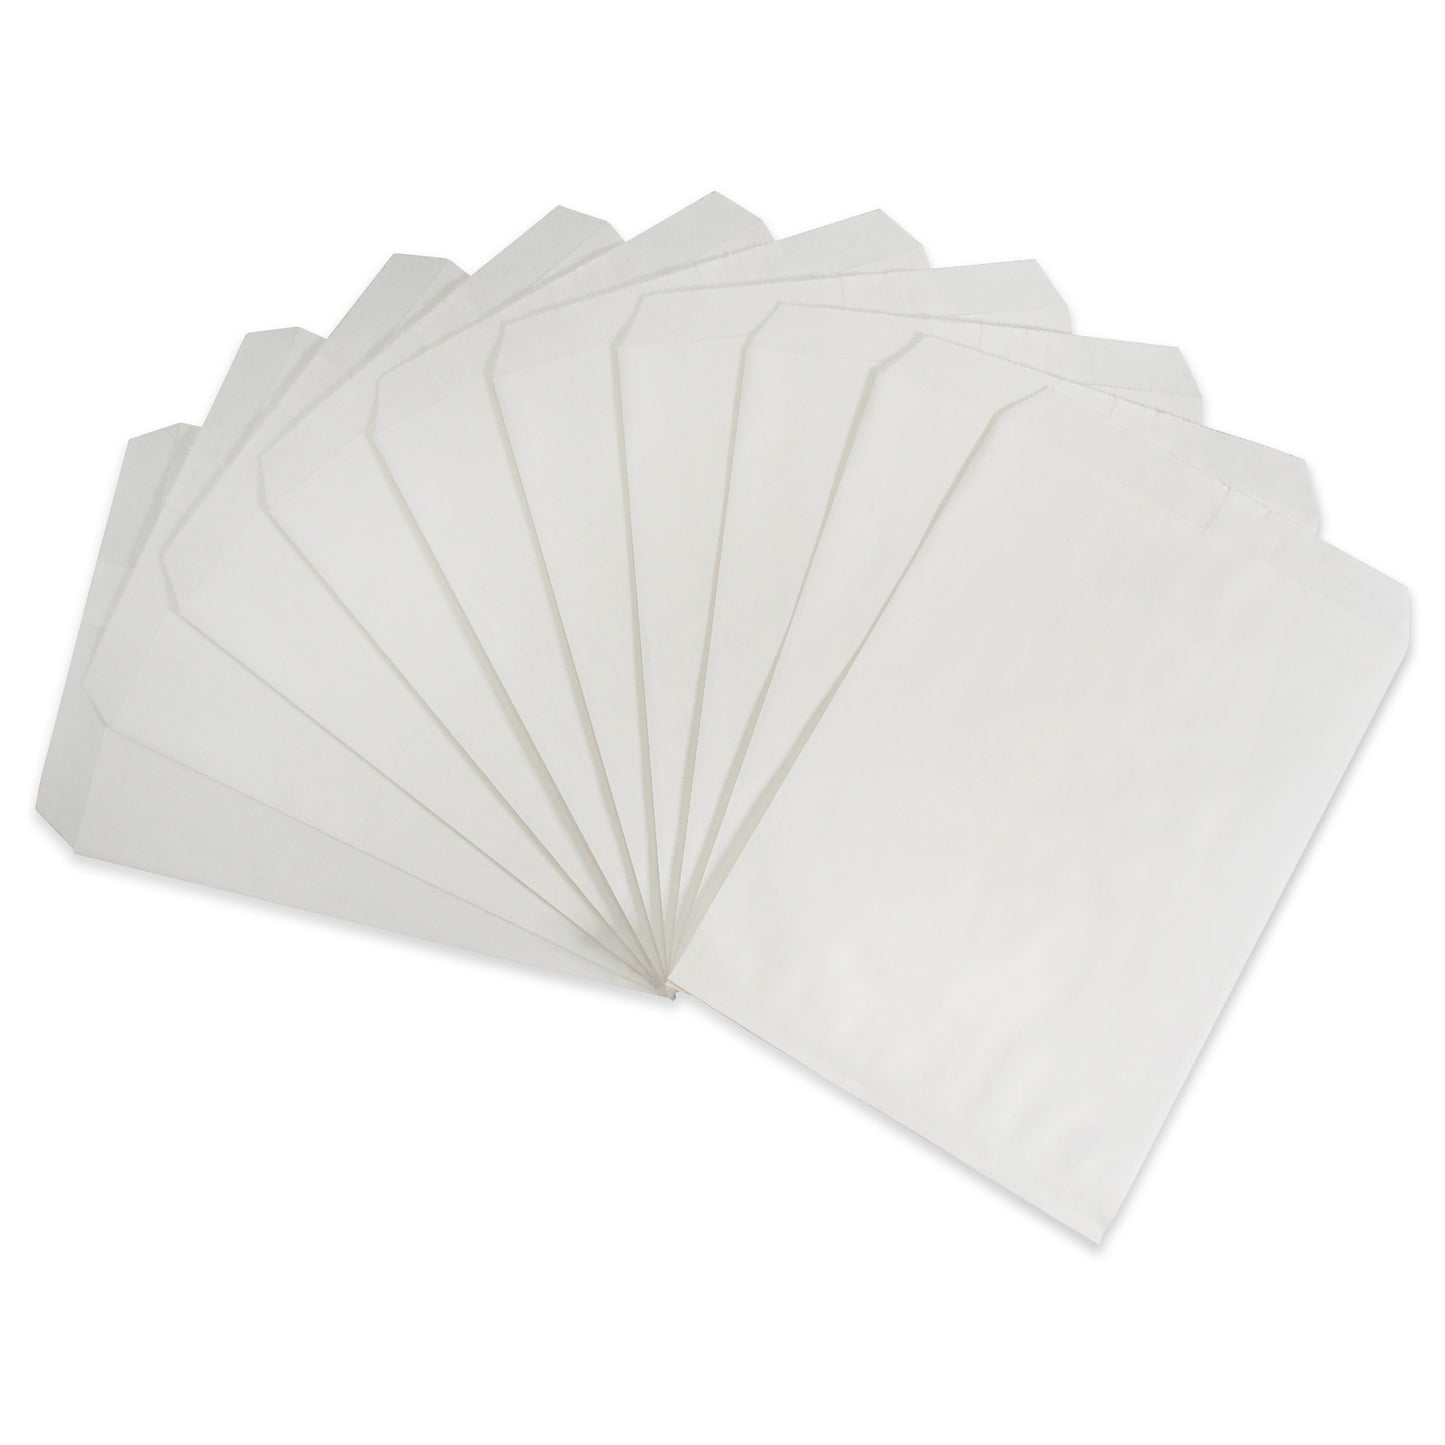 Plain White or Brown Kraft Paper Bags - 100Bags/Pack - Multiple Sizes